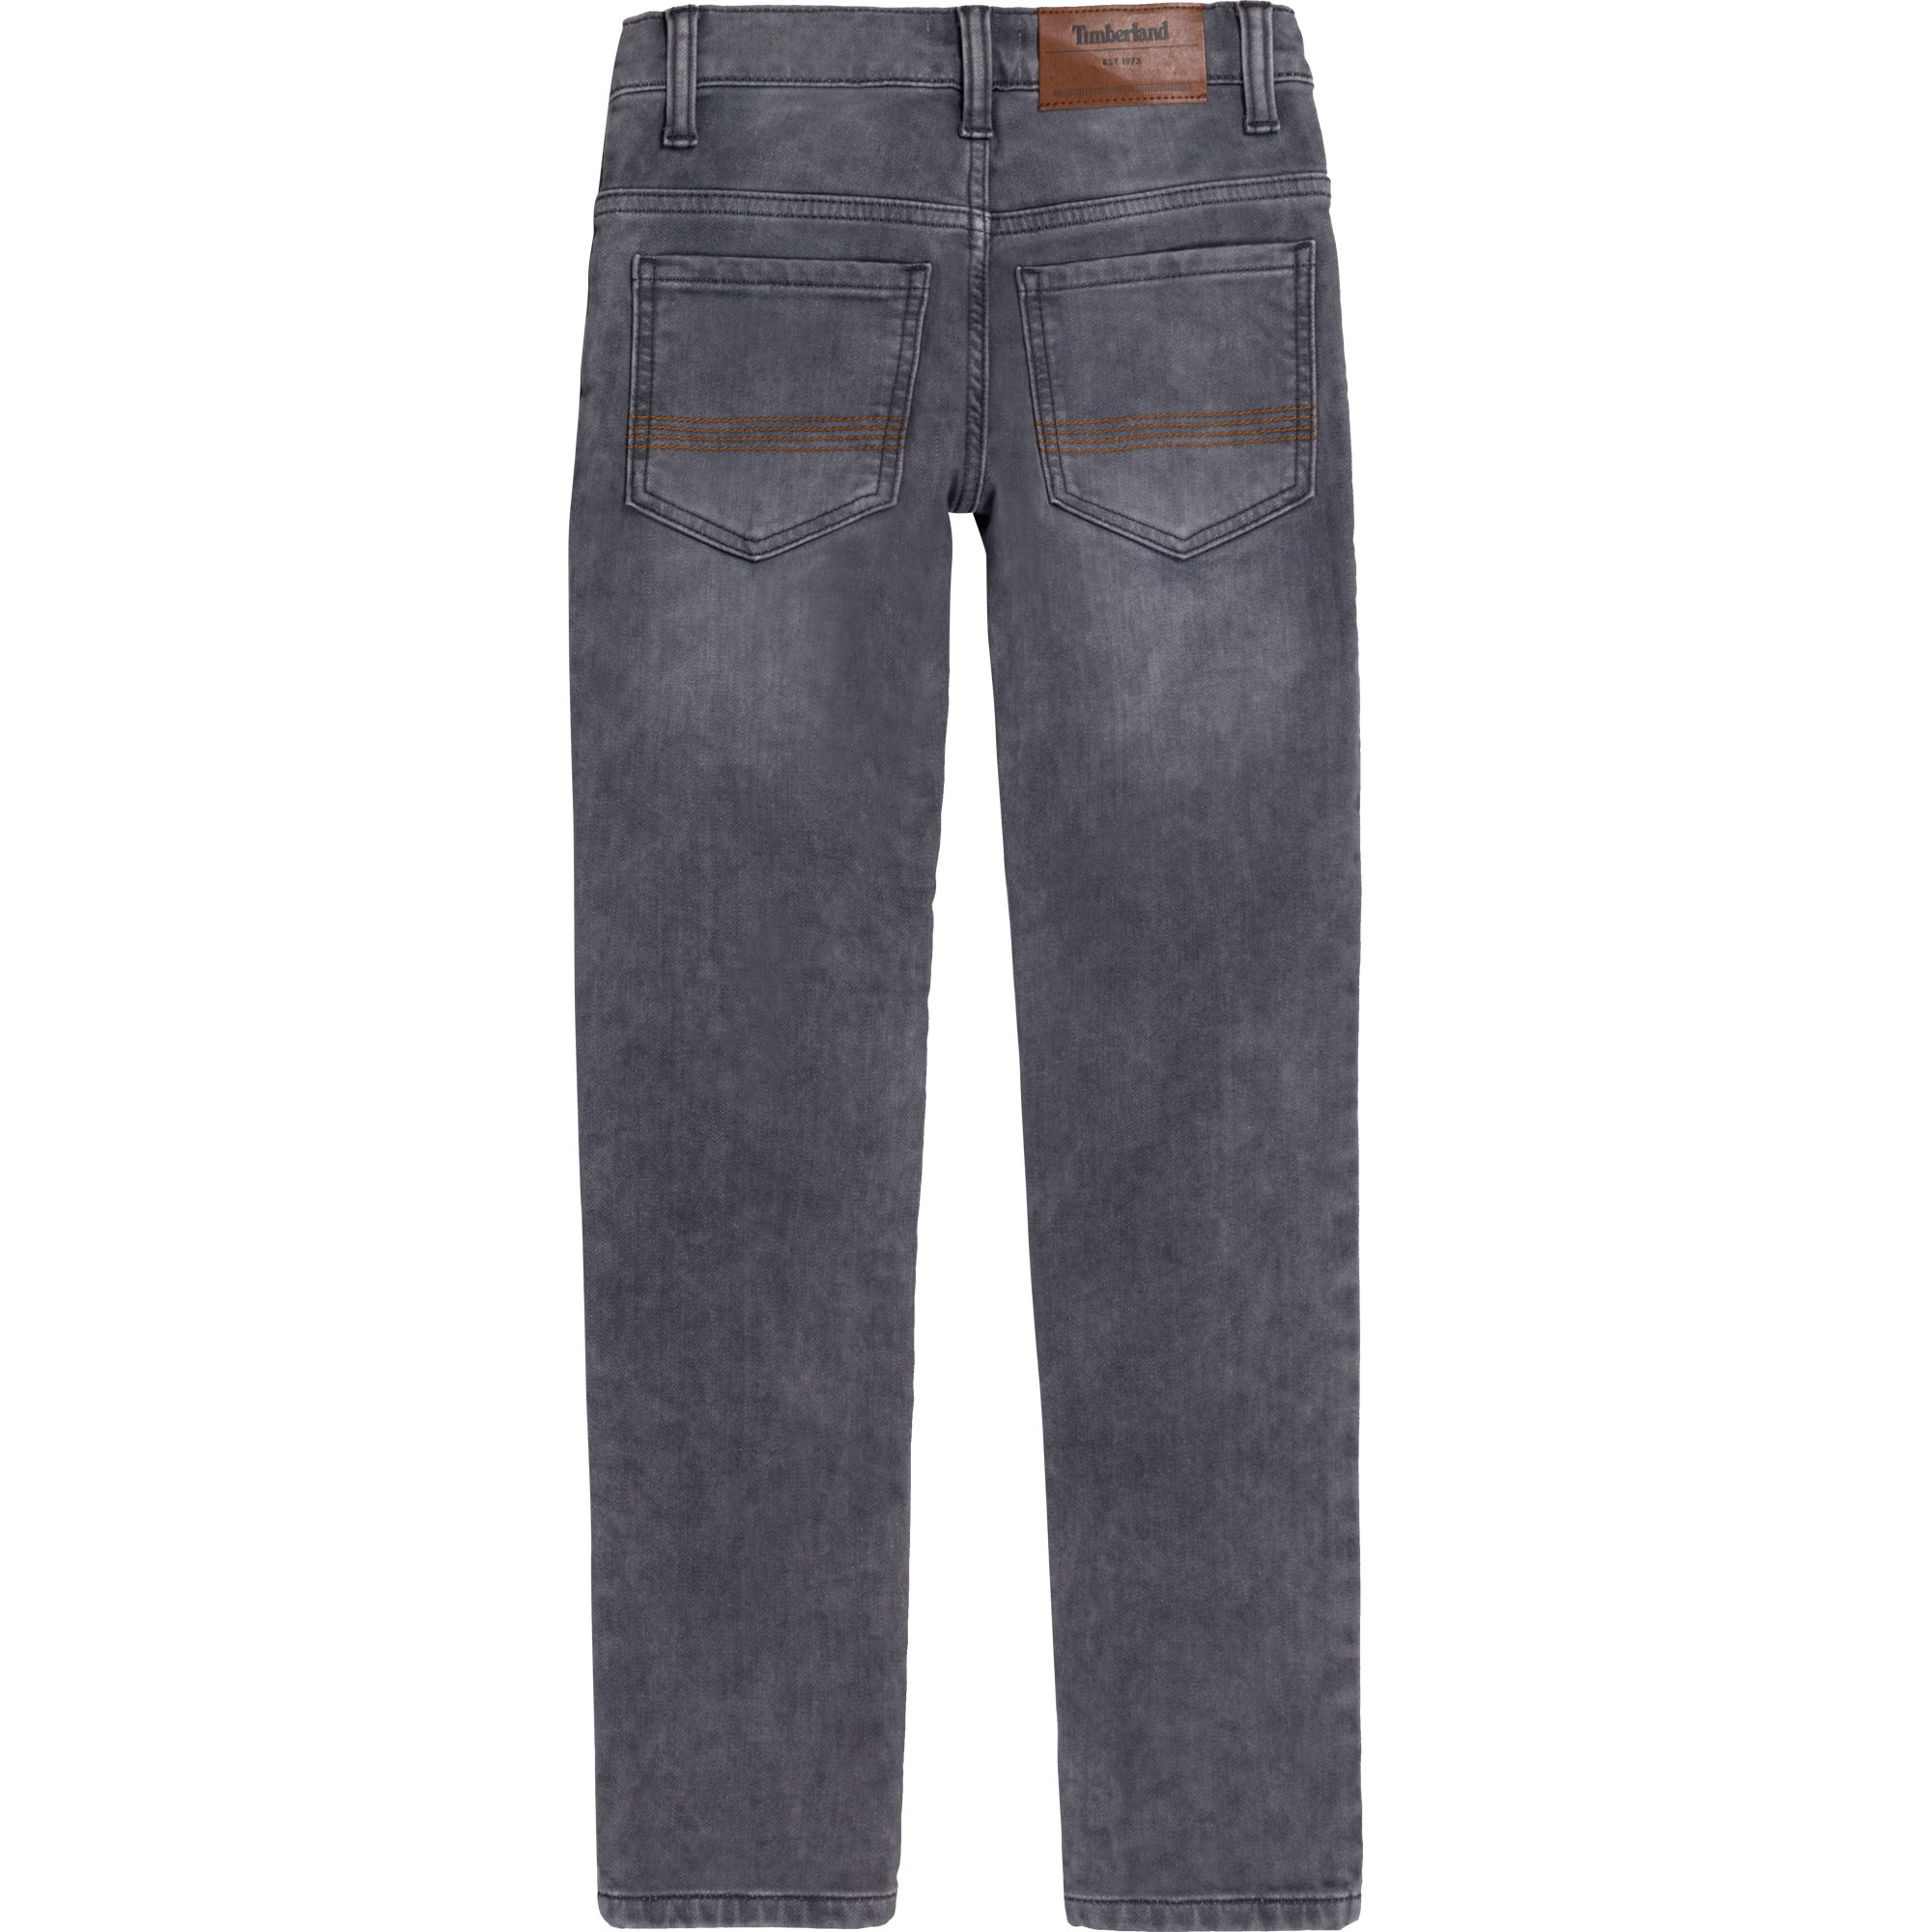 Adjustable slim-fit jeans TIMBERLAND for BOY